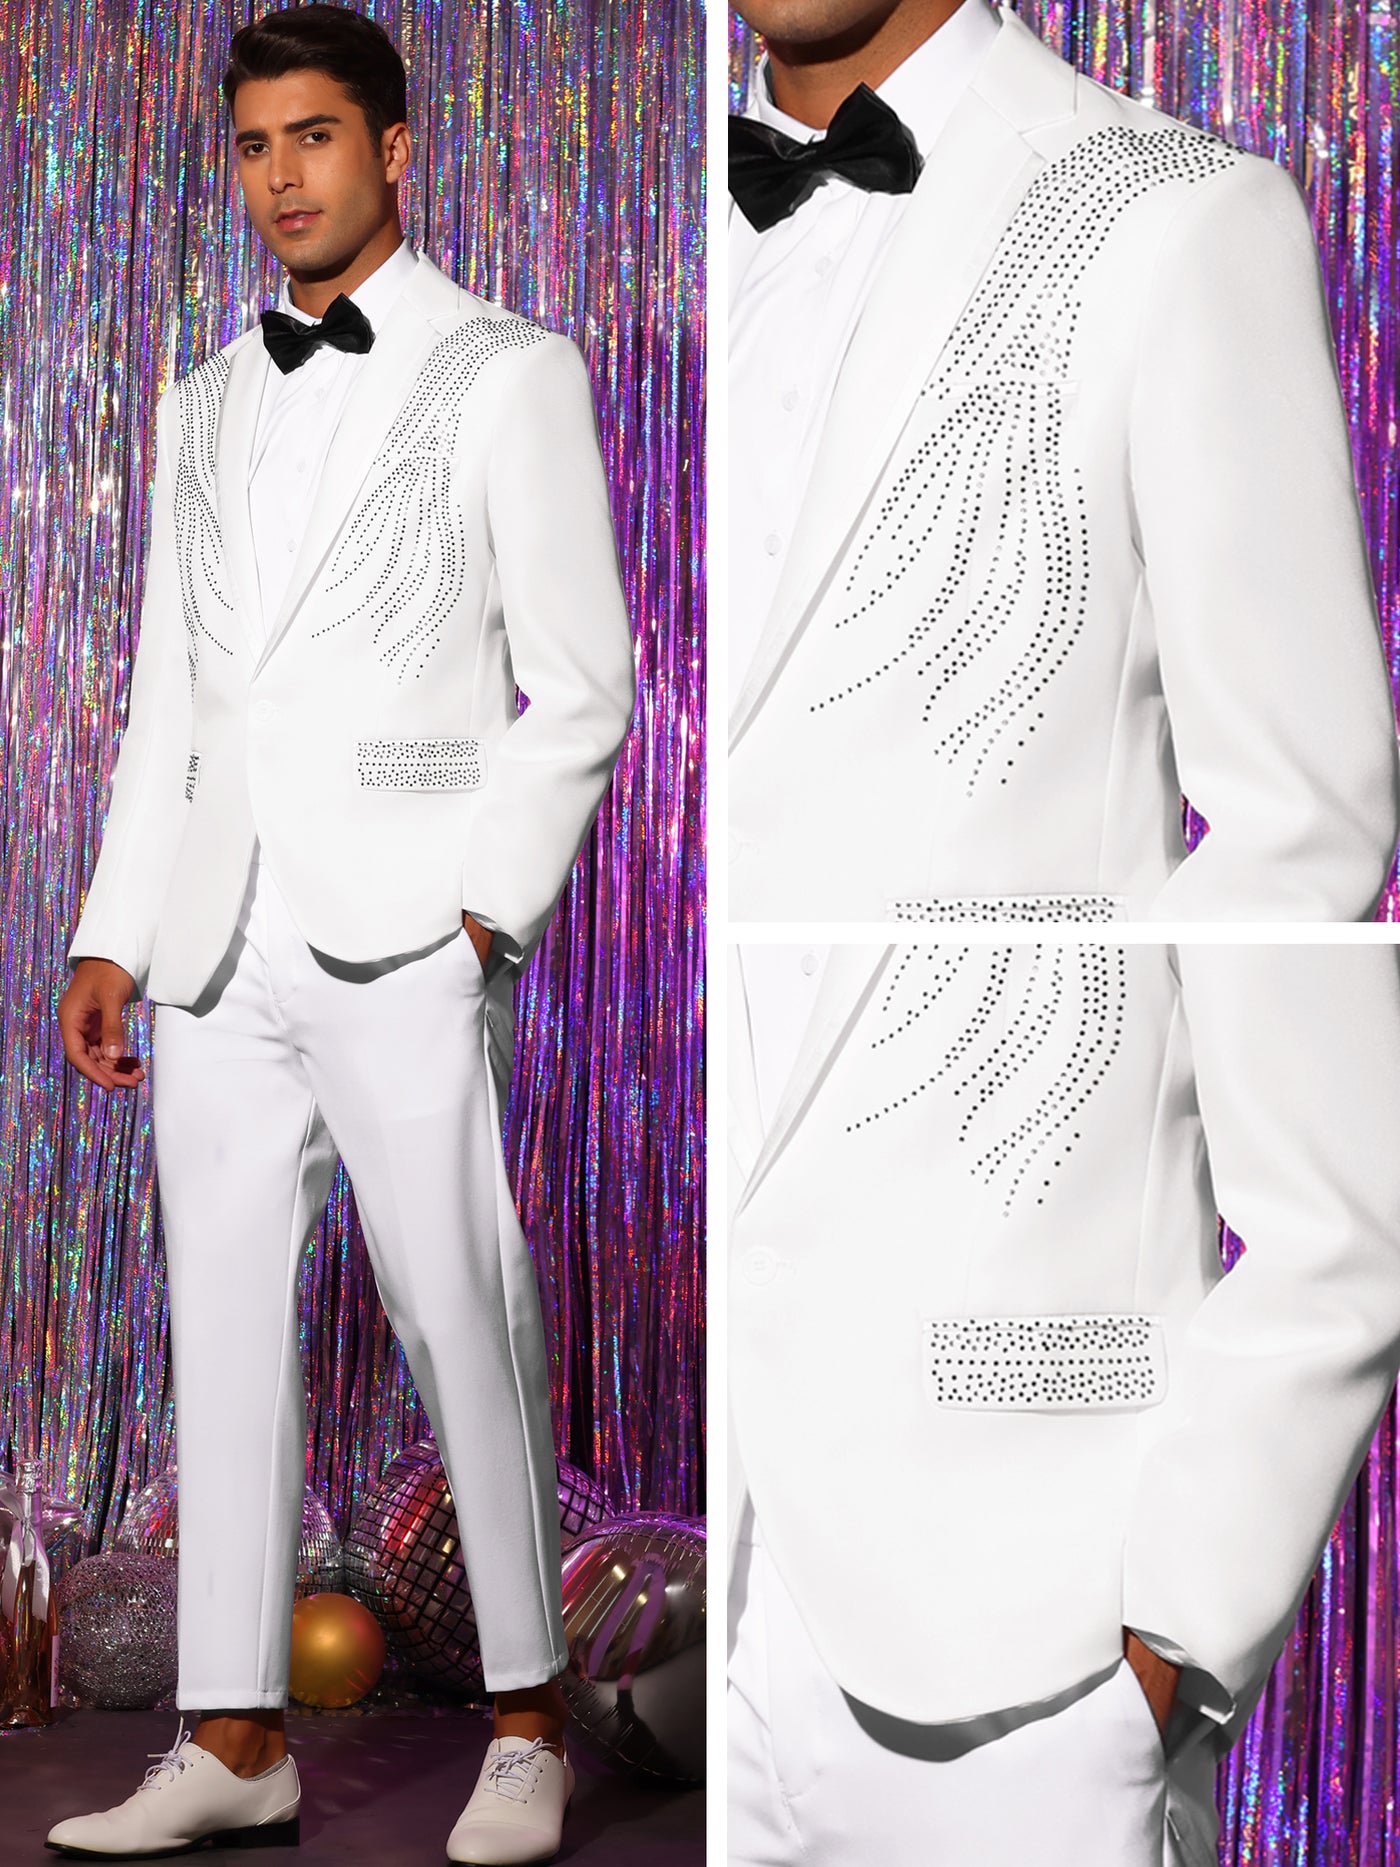 Bublédon Tuxedo Suit Jacket for Men's Slim Fit Party Prom Shiny Rhinestone Decoration Blazer